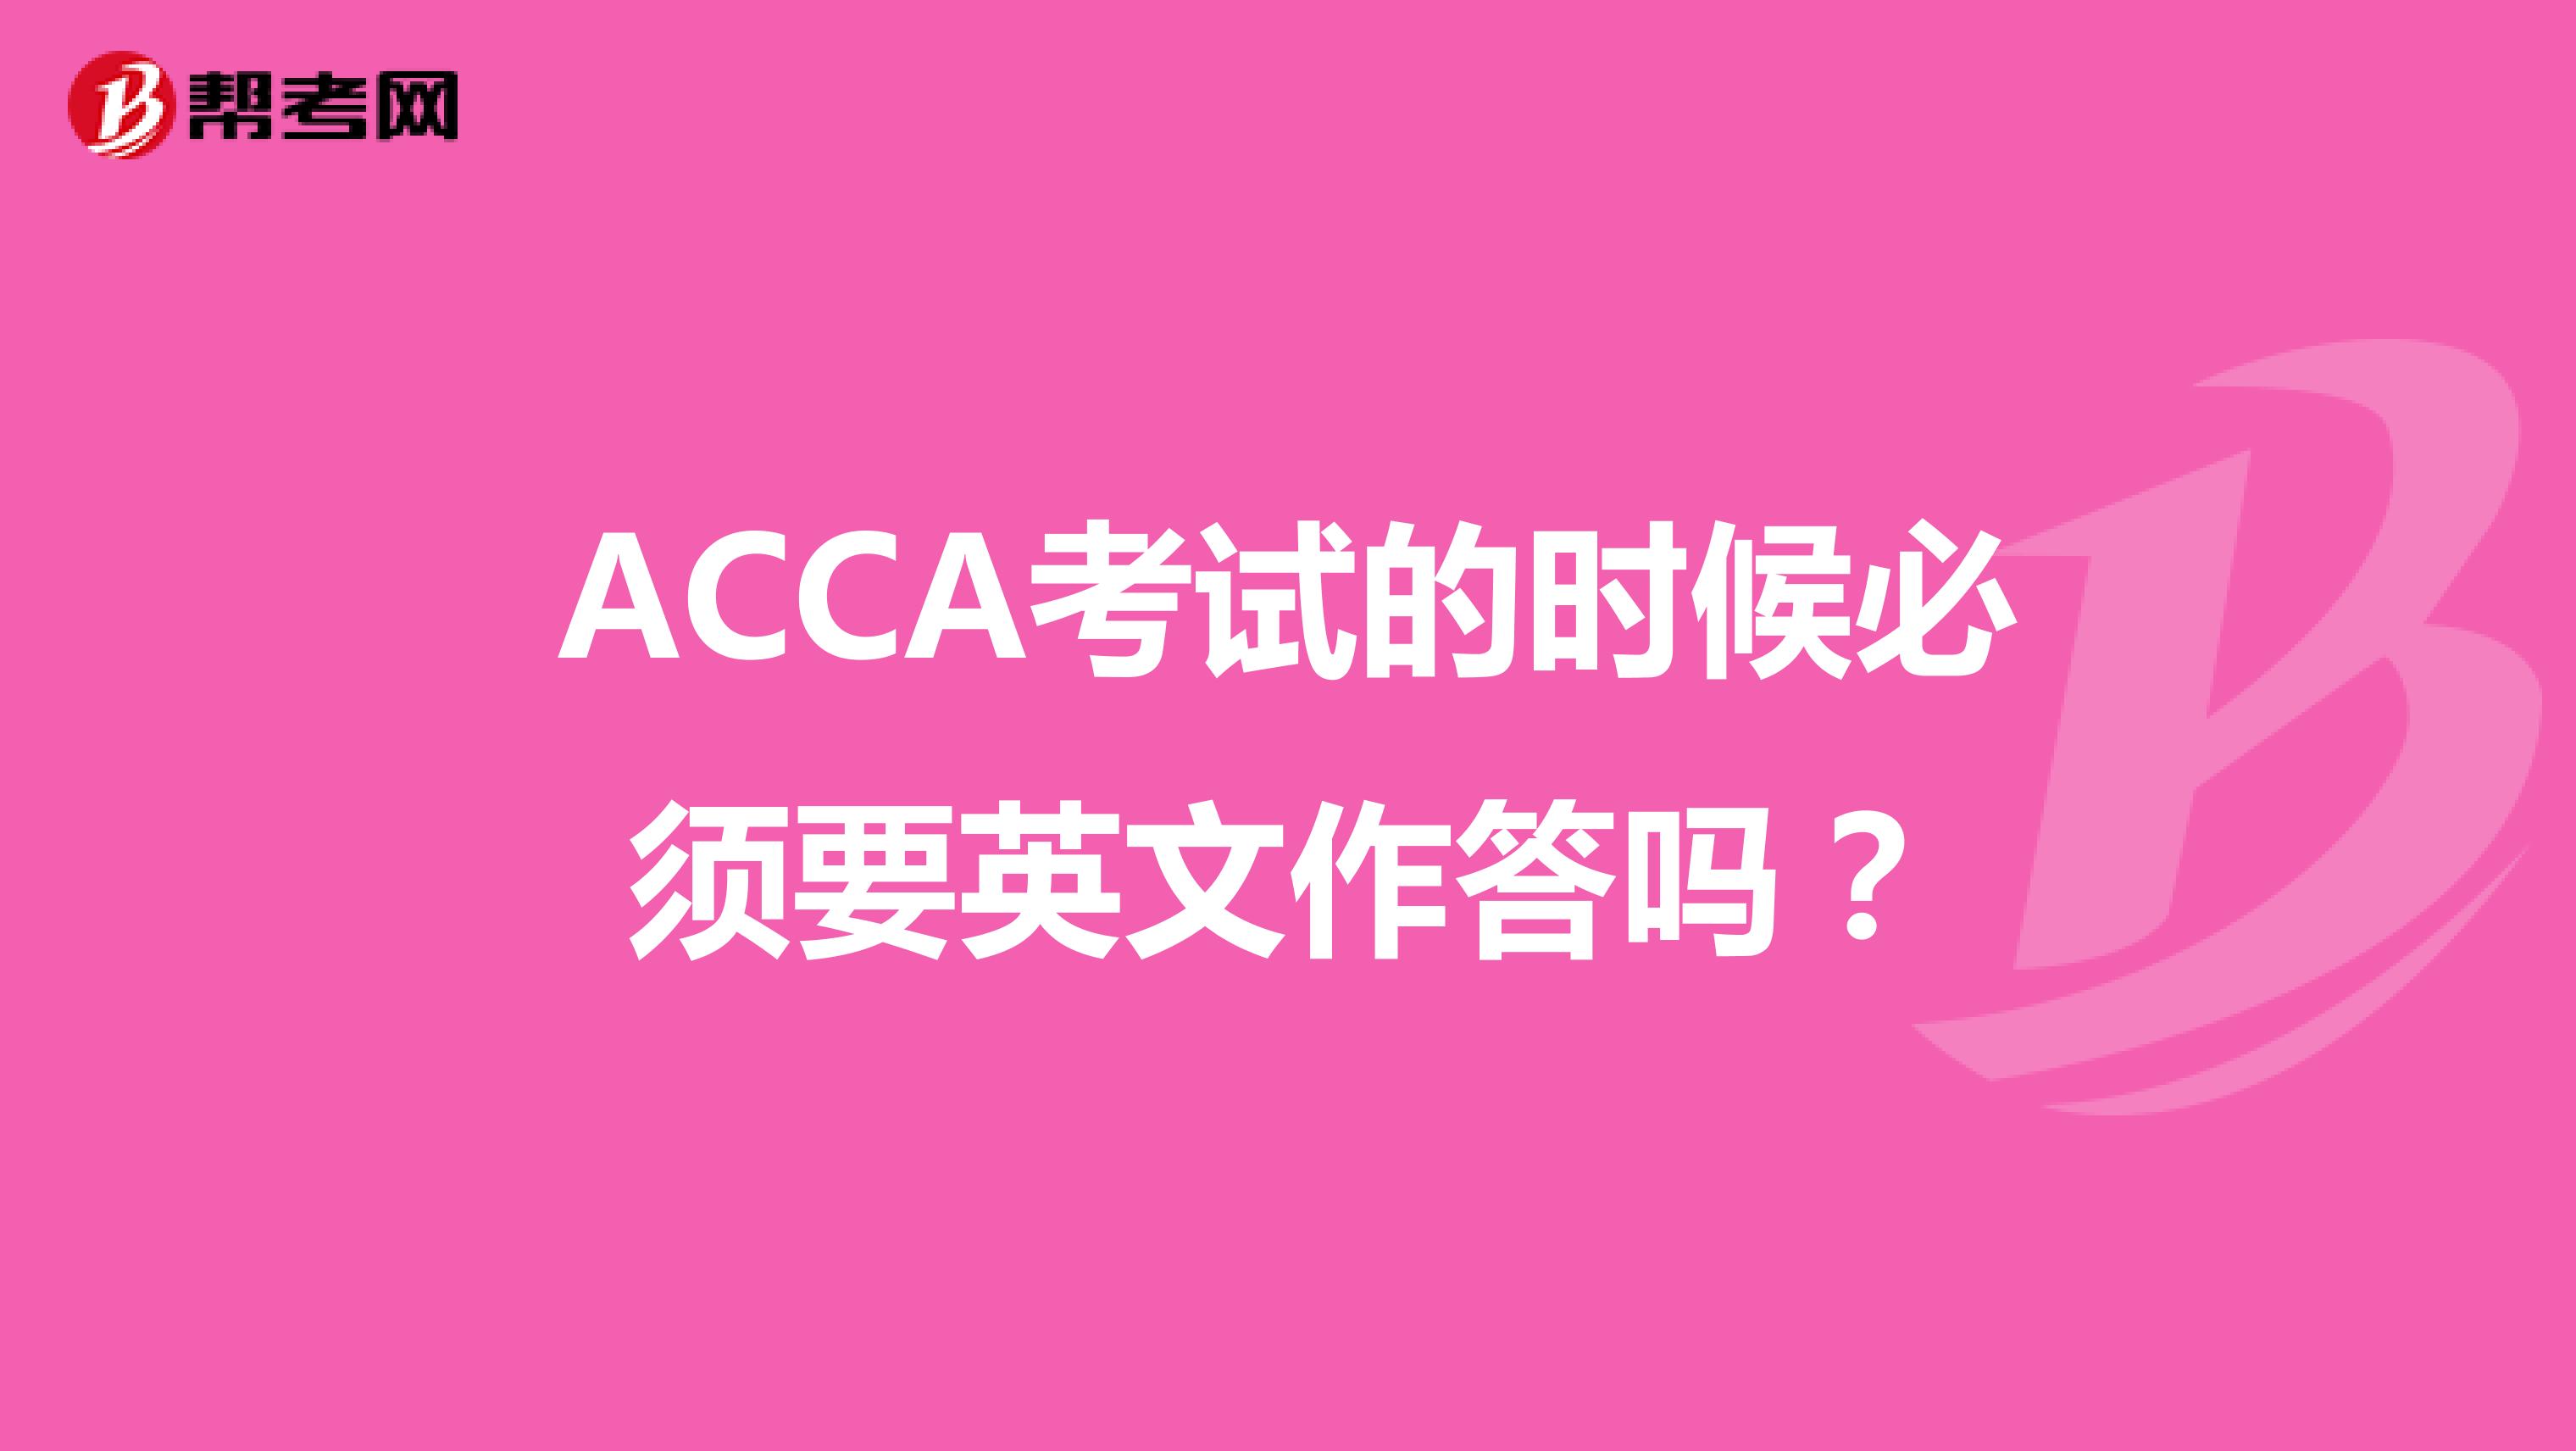 ACCA考试的时候必须要英文作答吗？